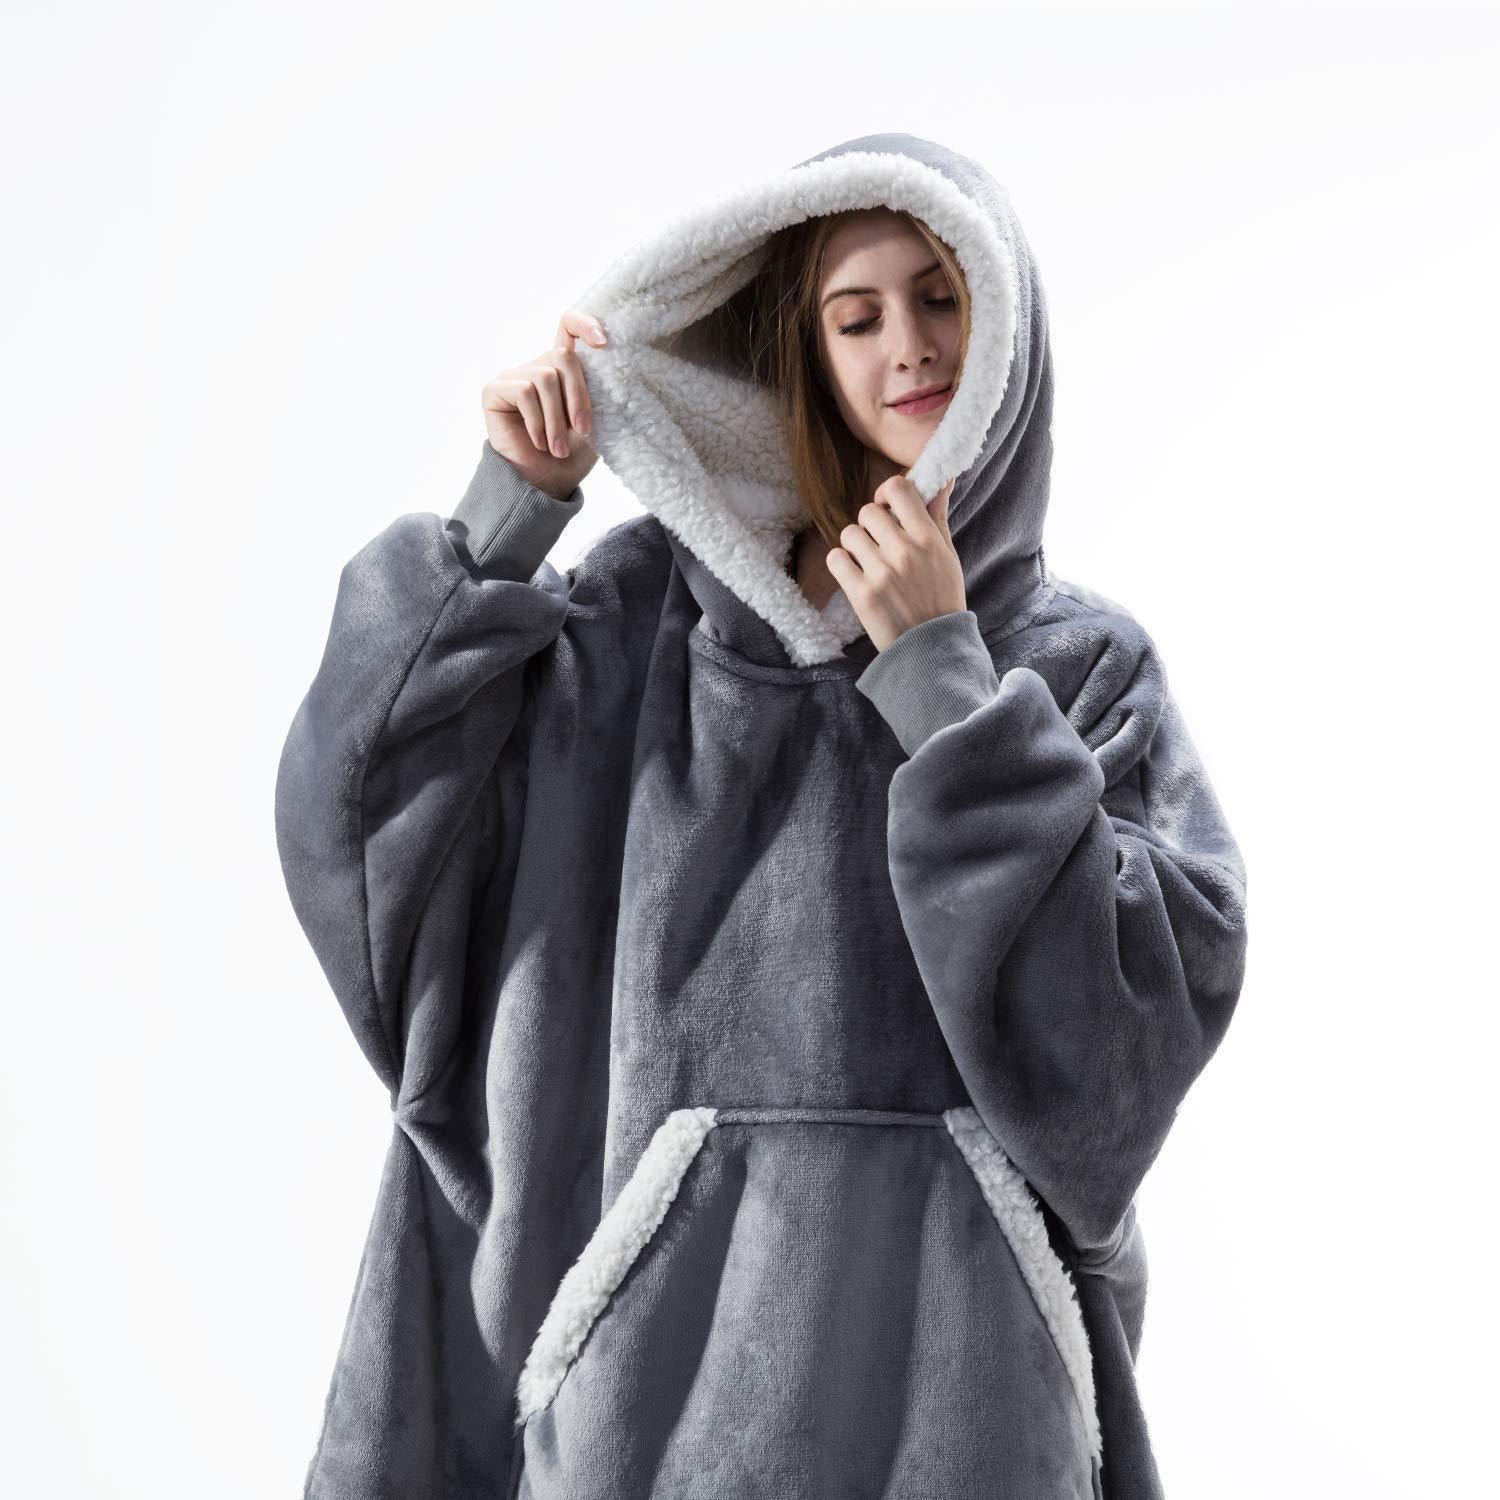 Wearable Fleece Hoodies Sleepwear for Watching TV-Blankets-Gray-One Size-Free Shipping Leatheretro